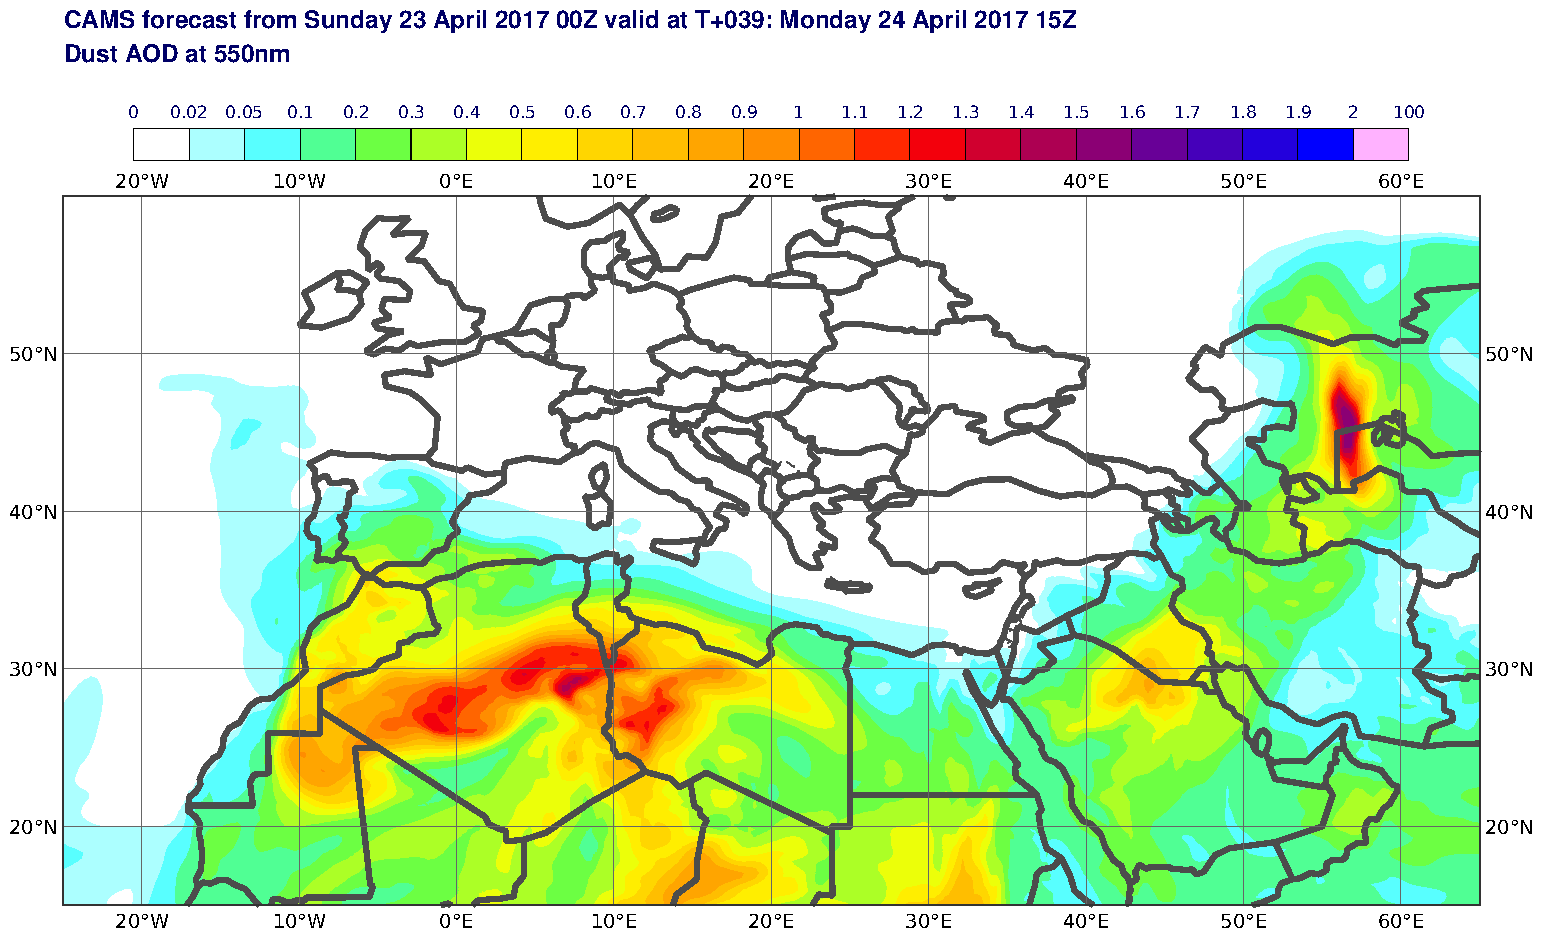 Dust AOD at 550nm valid at T39 - 2017-04-24 15:00